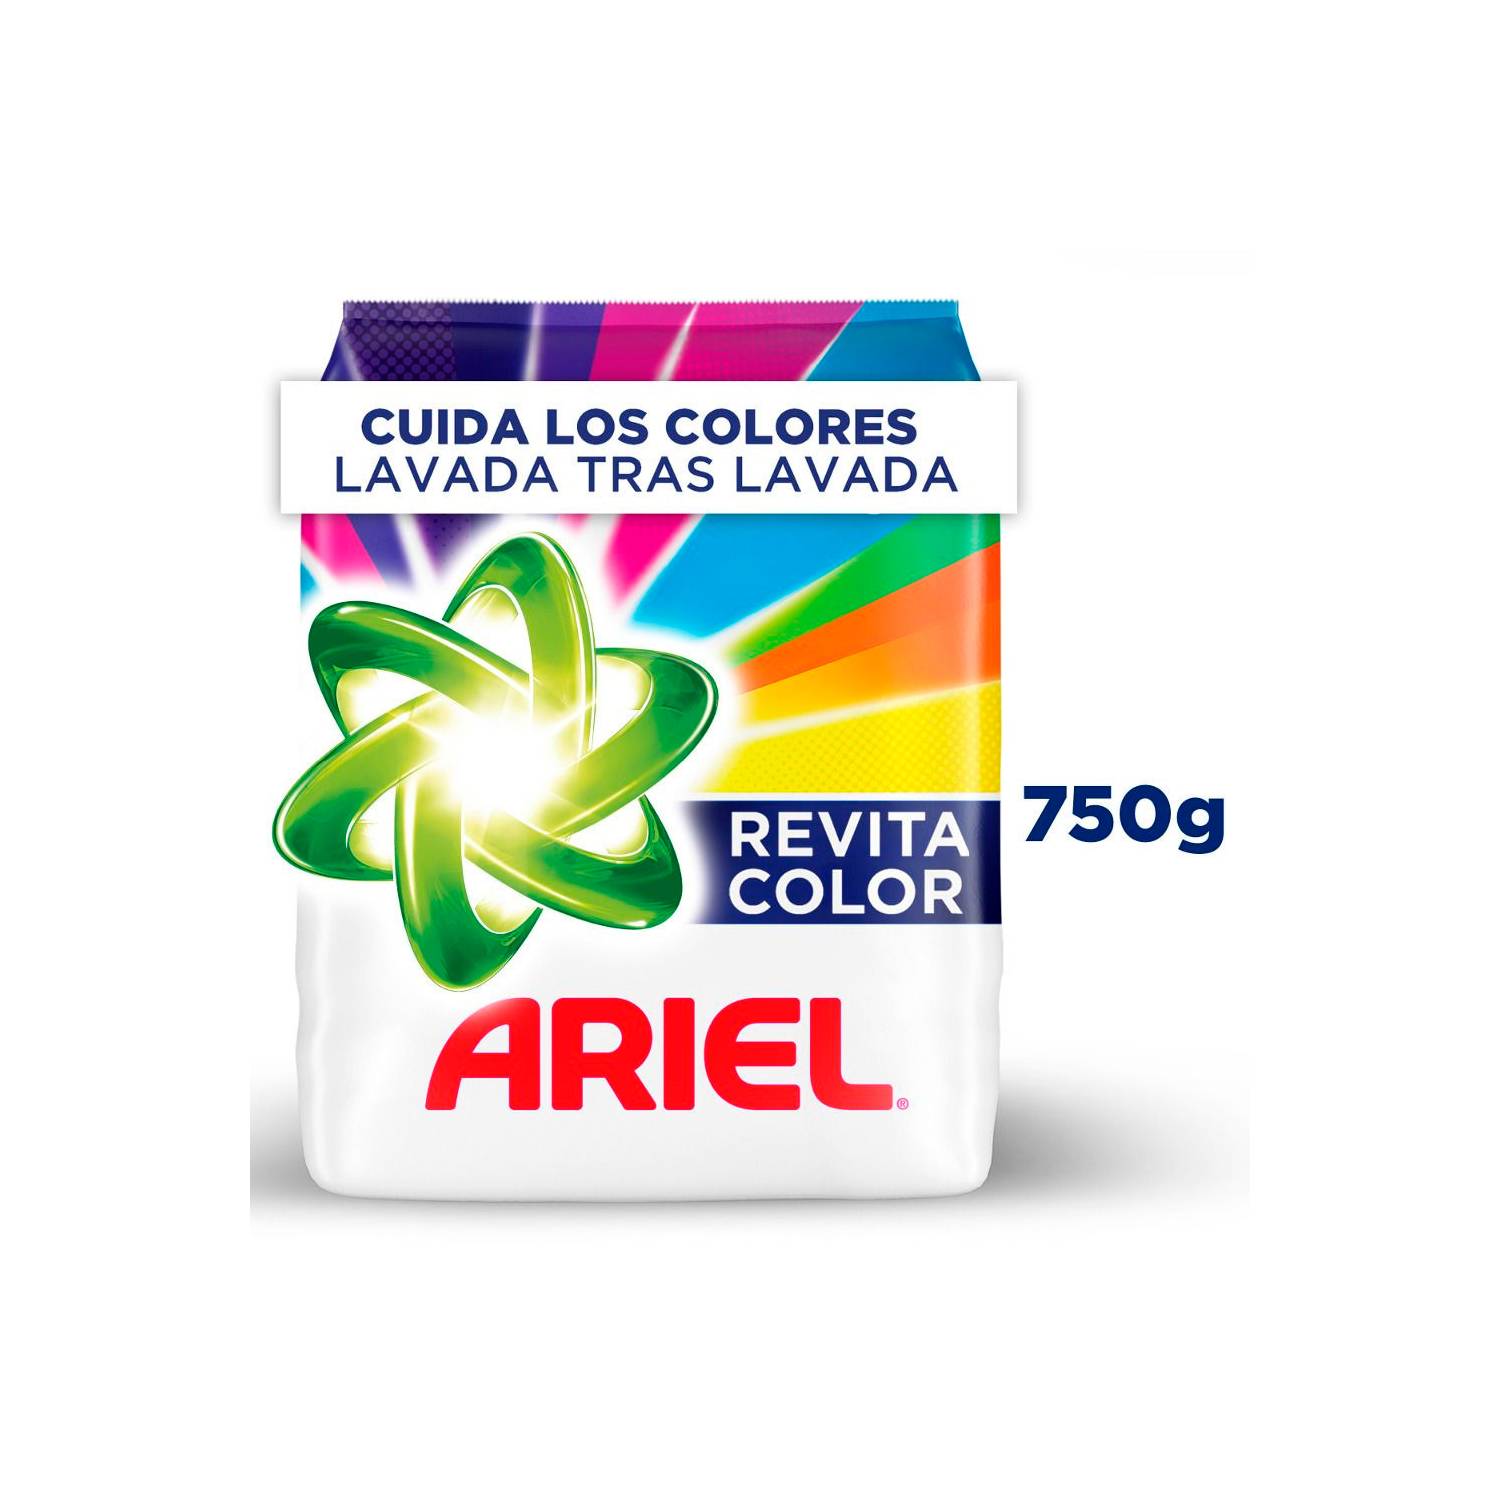 Detergente en Polvo Ariel Revitacolor 4Kg